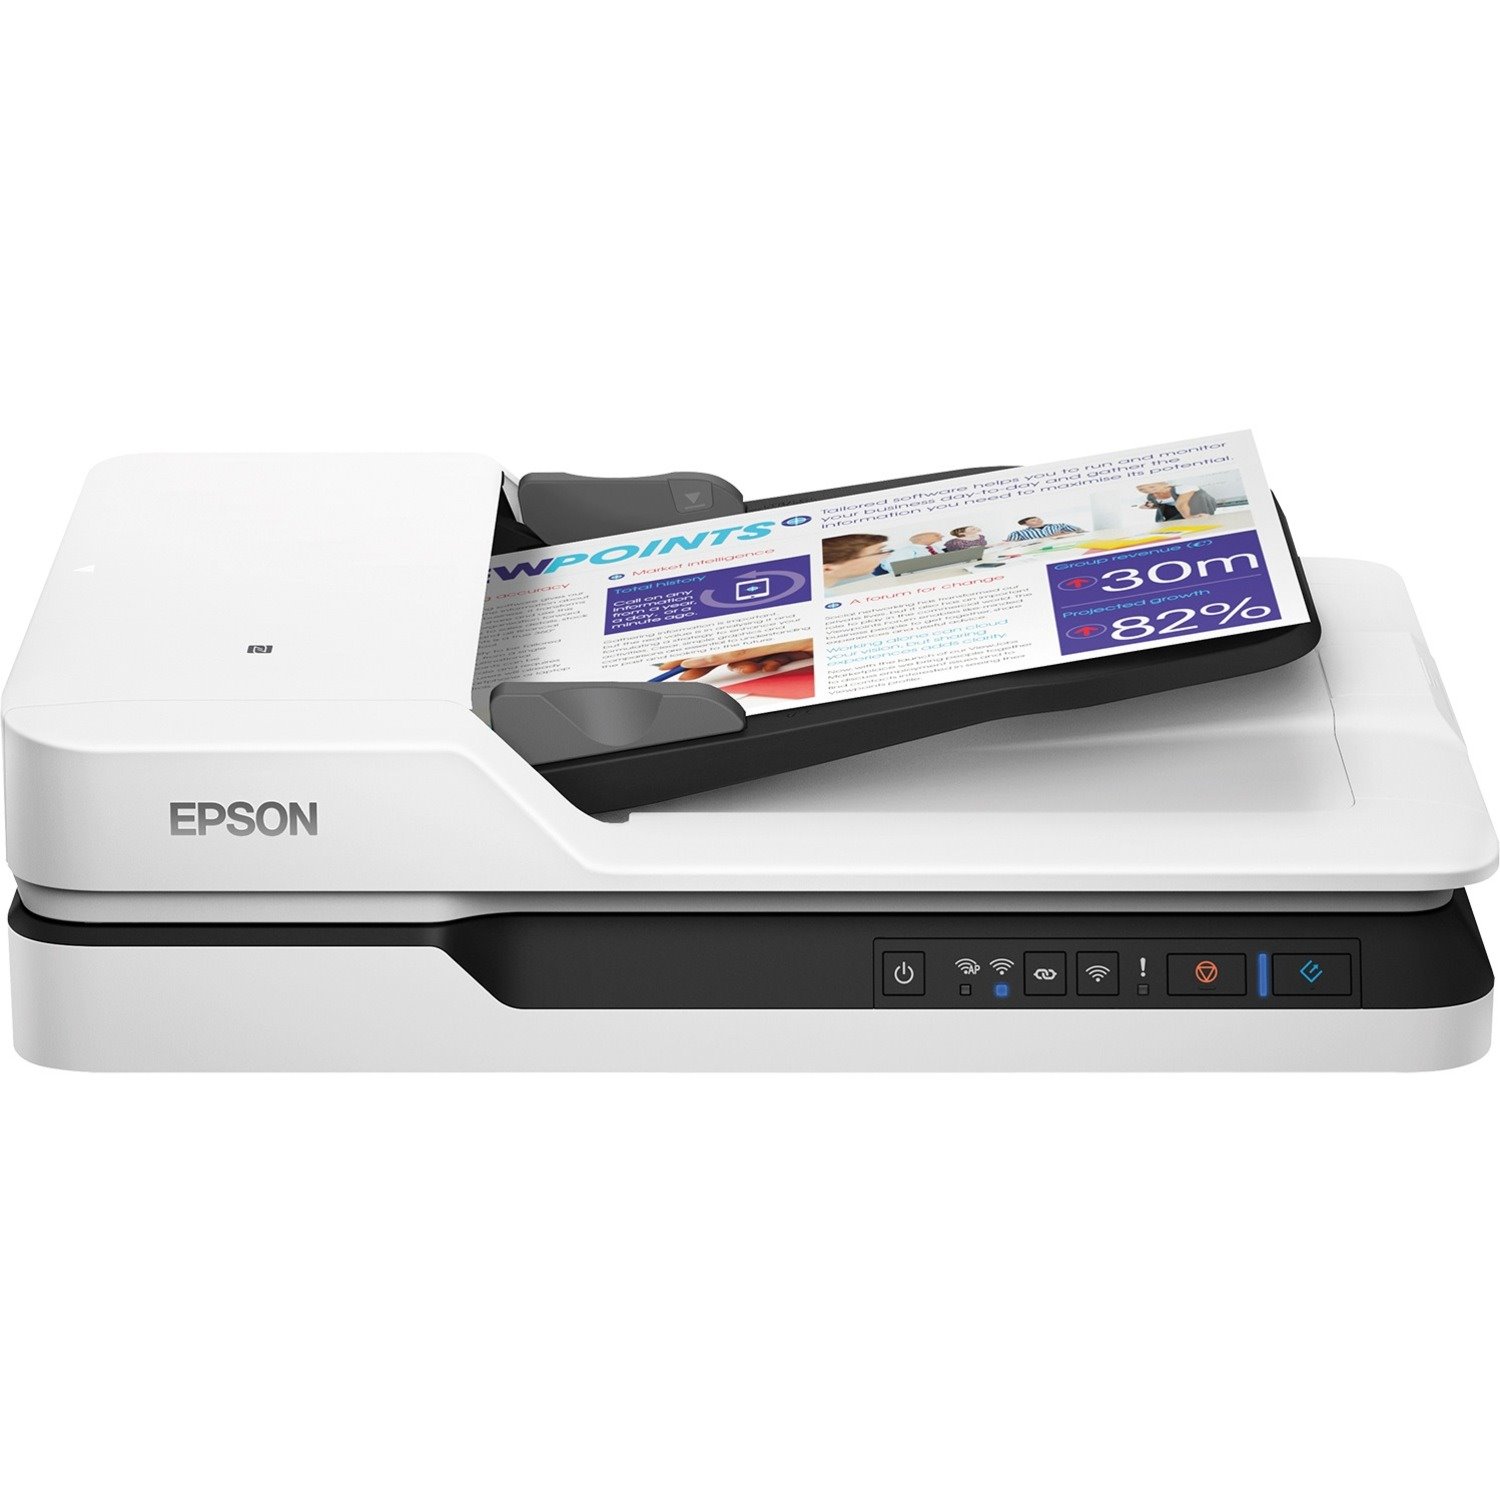 Epson WorkForce DS-1660W Flatbed Scanner - 600 dpi Optical